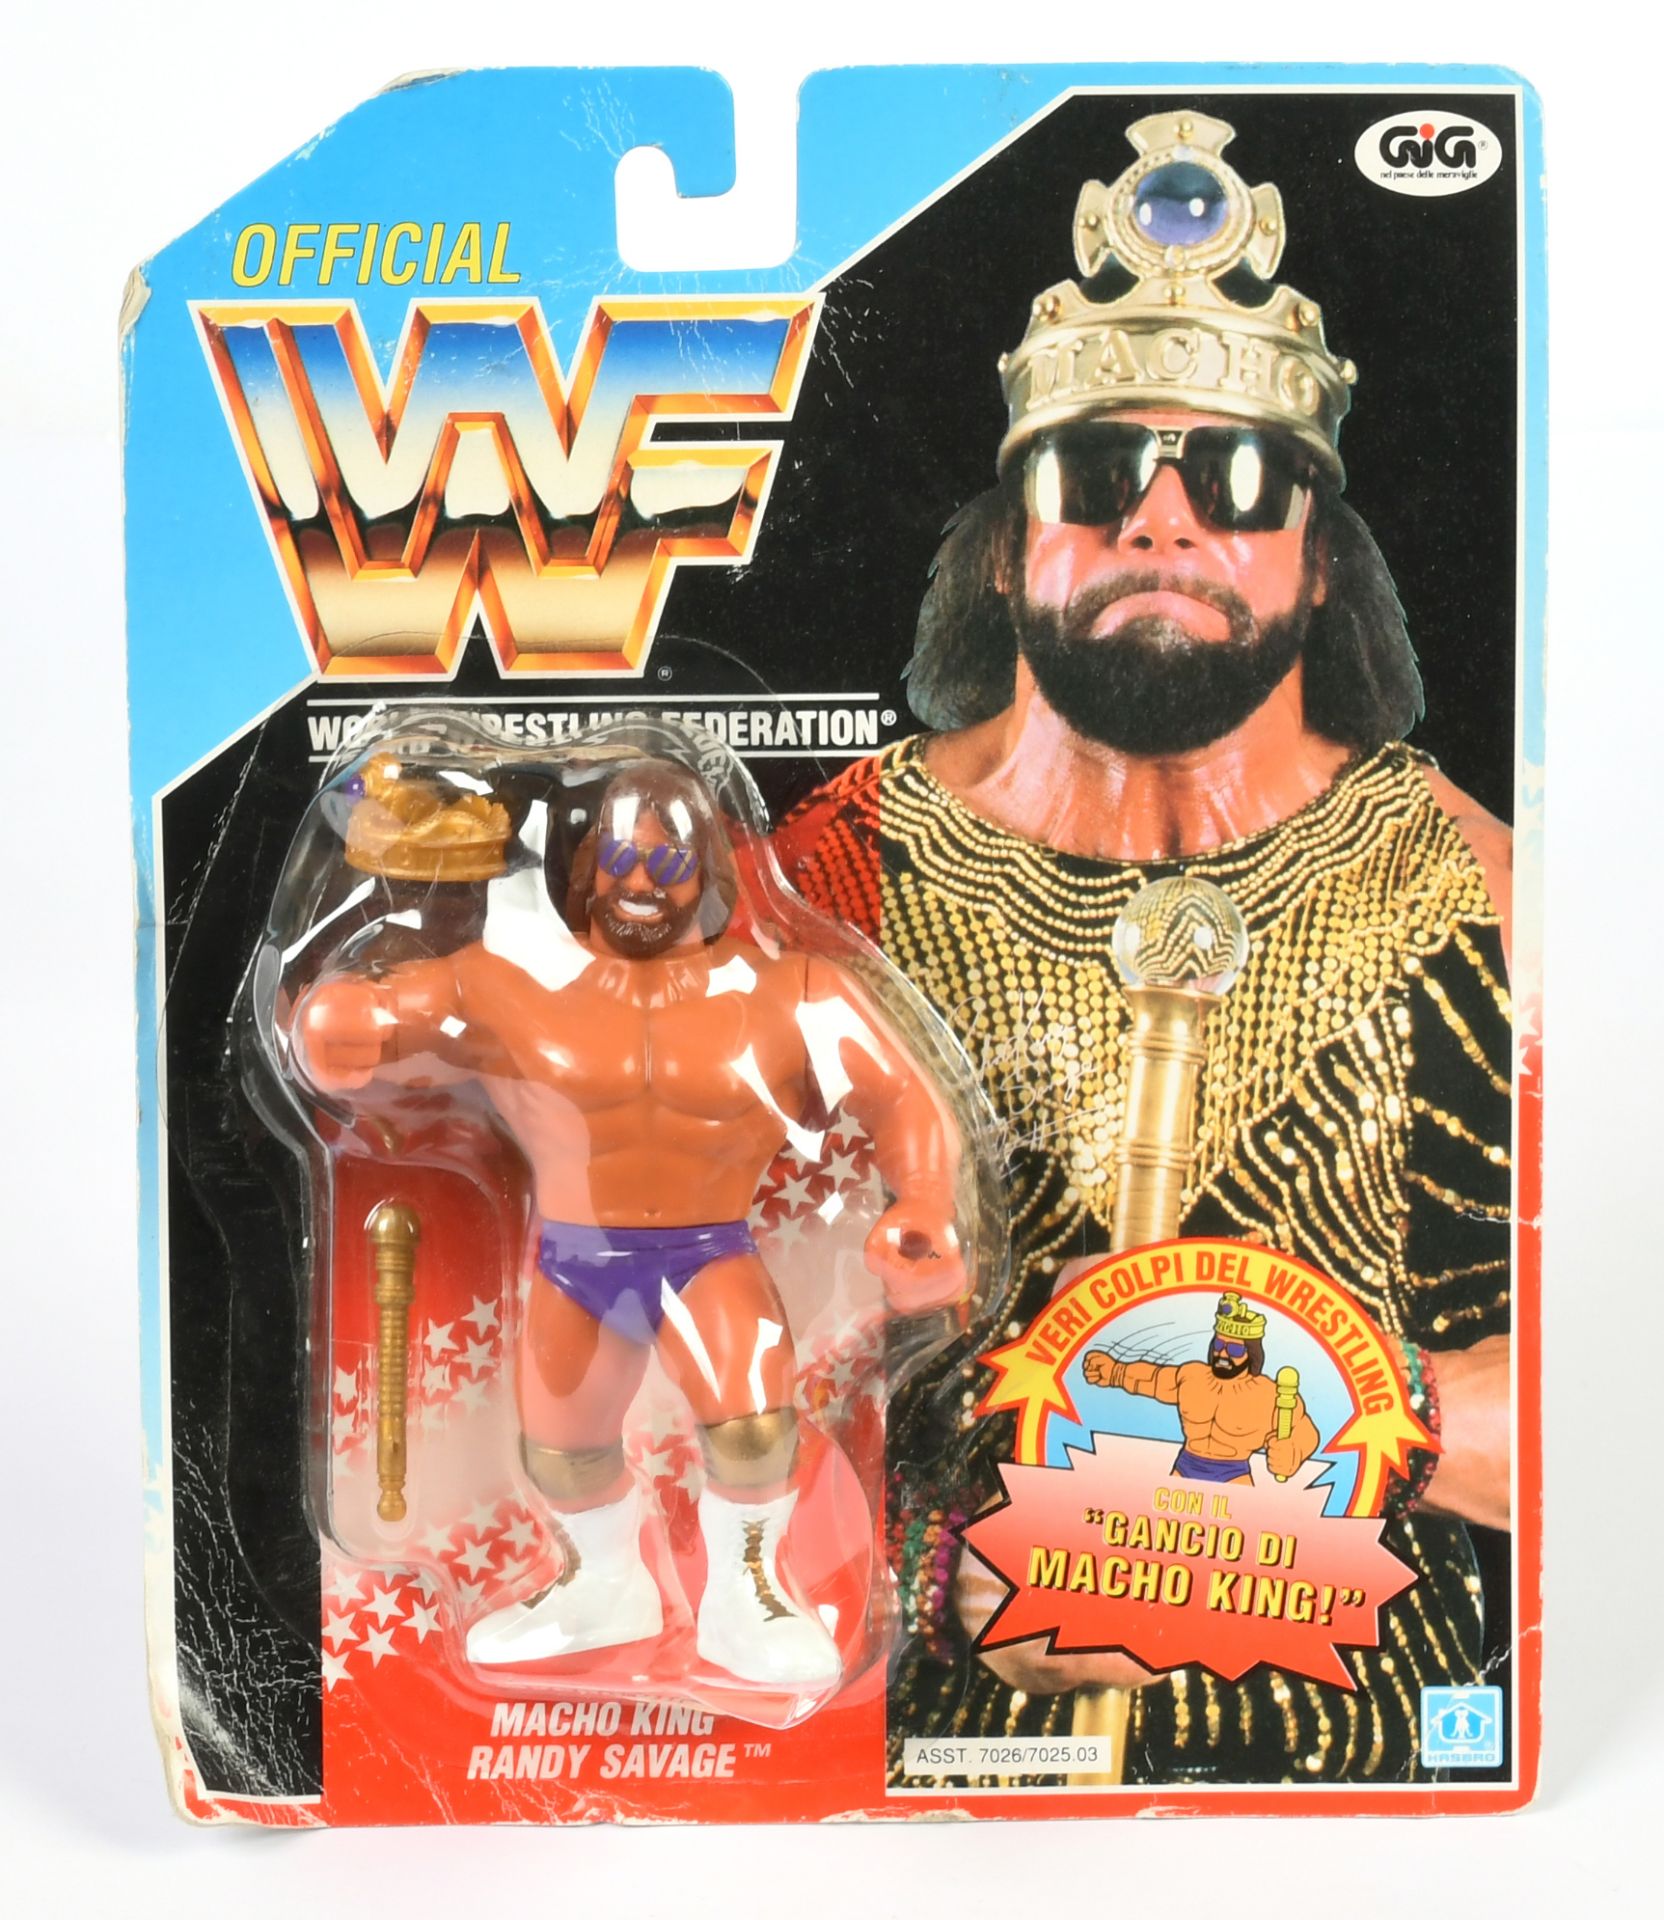 Hasbro WWF Macho King Randy Savage figure